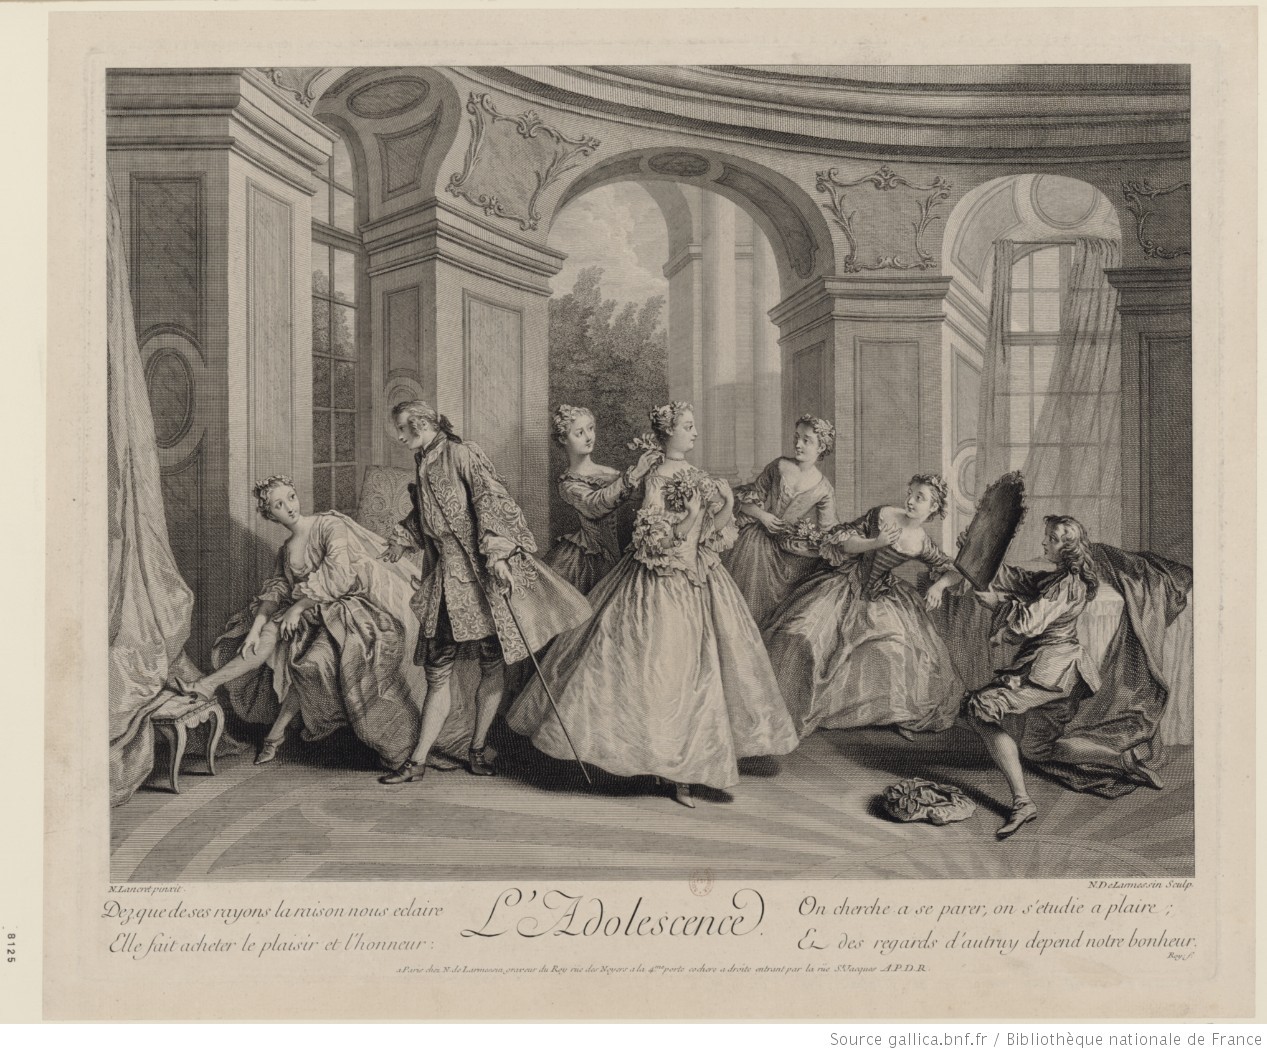 Nicolas Lancret, L’Adolescence, 1707-1708, Paris, N. De Larmessin, estampe. Bibliothèque Nationale de France. [en ligne]. https://gallica.bnf.fr/ark:/12148/btv1b84087496.r=adolescence?rk=85837;2